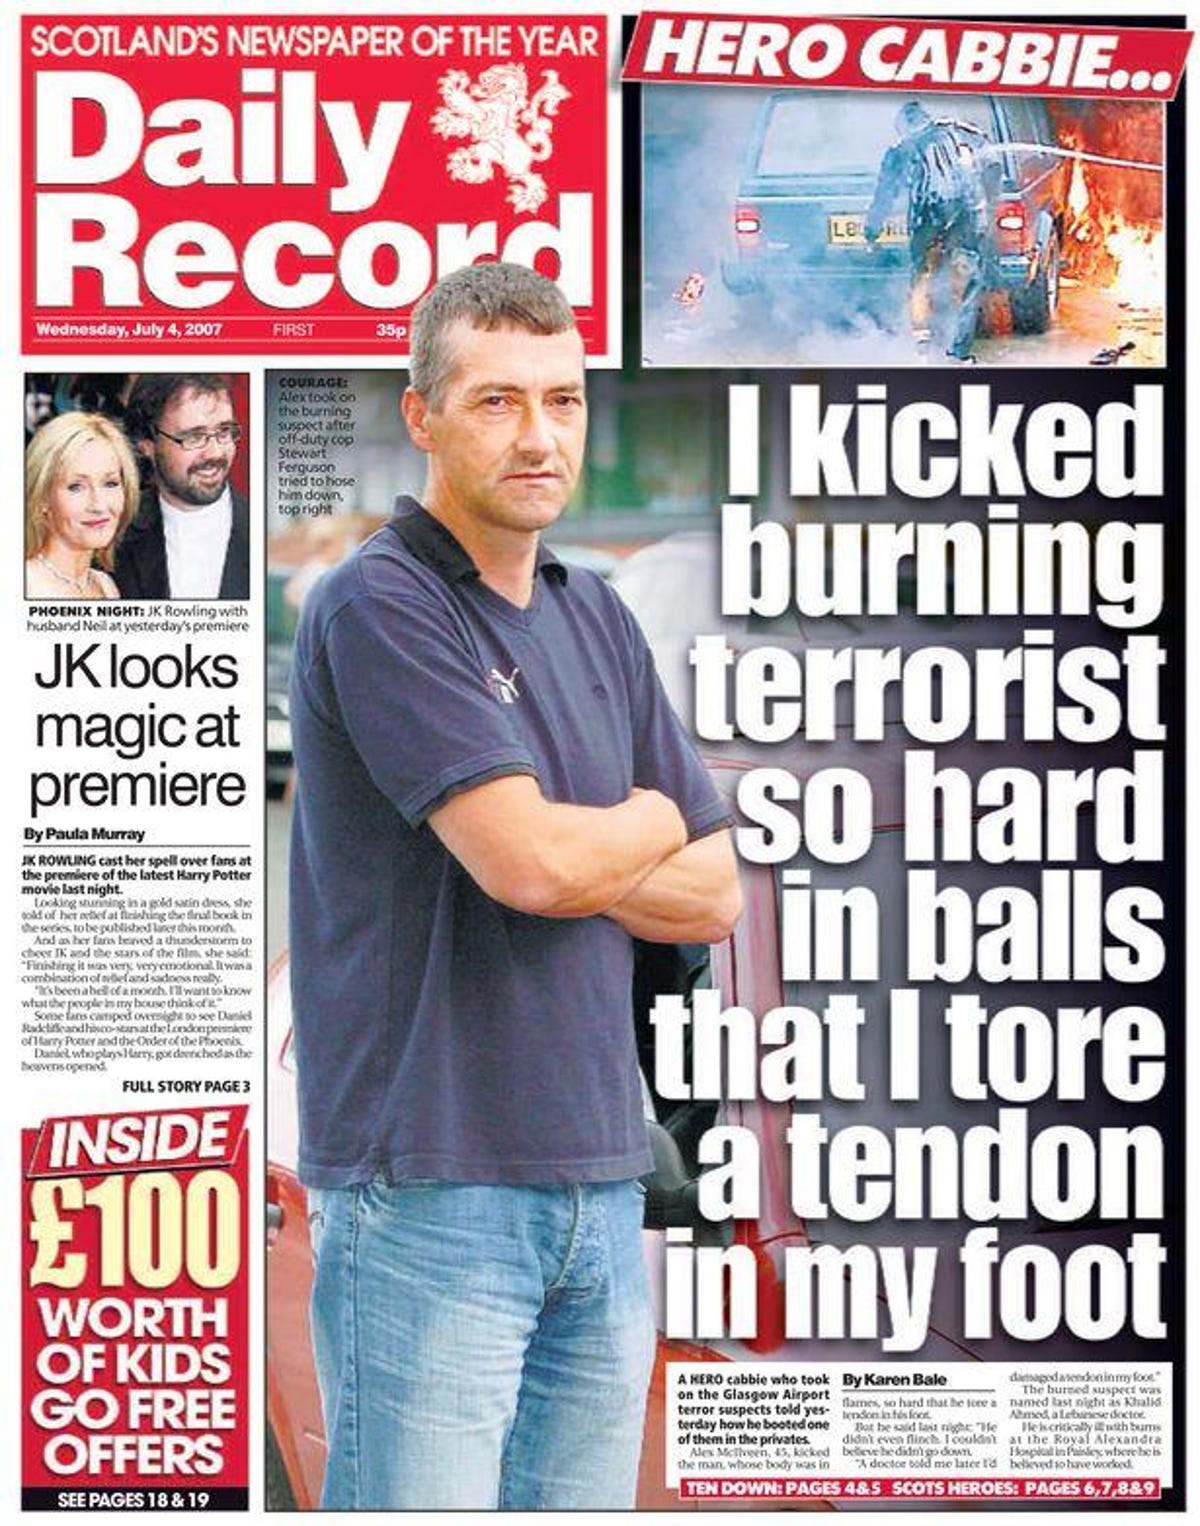 daily-record-terrorist-kick-balls